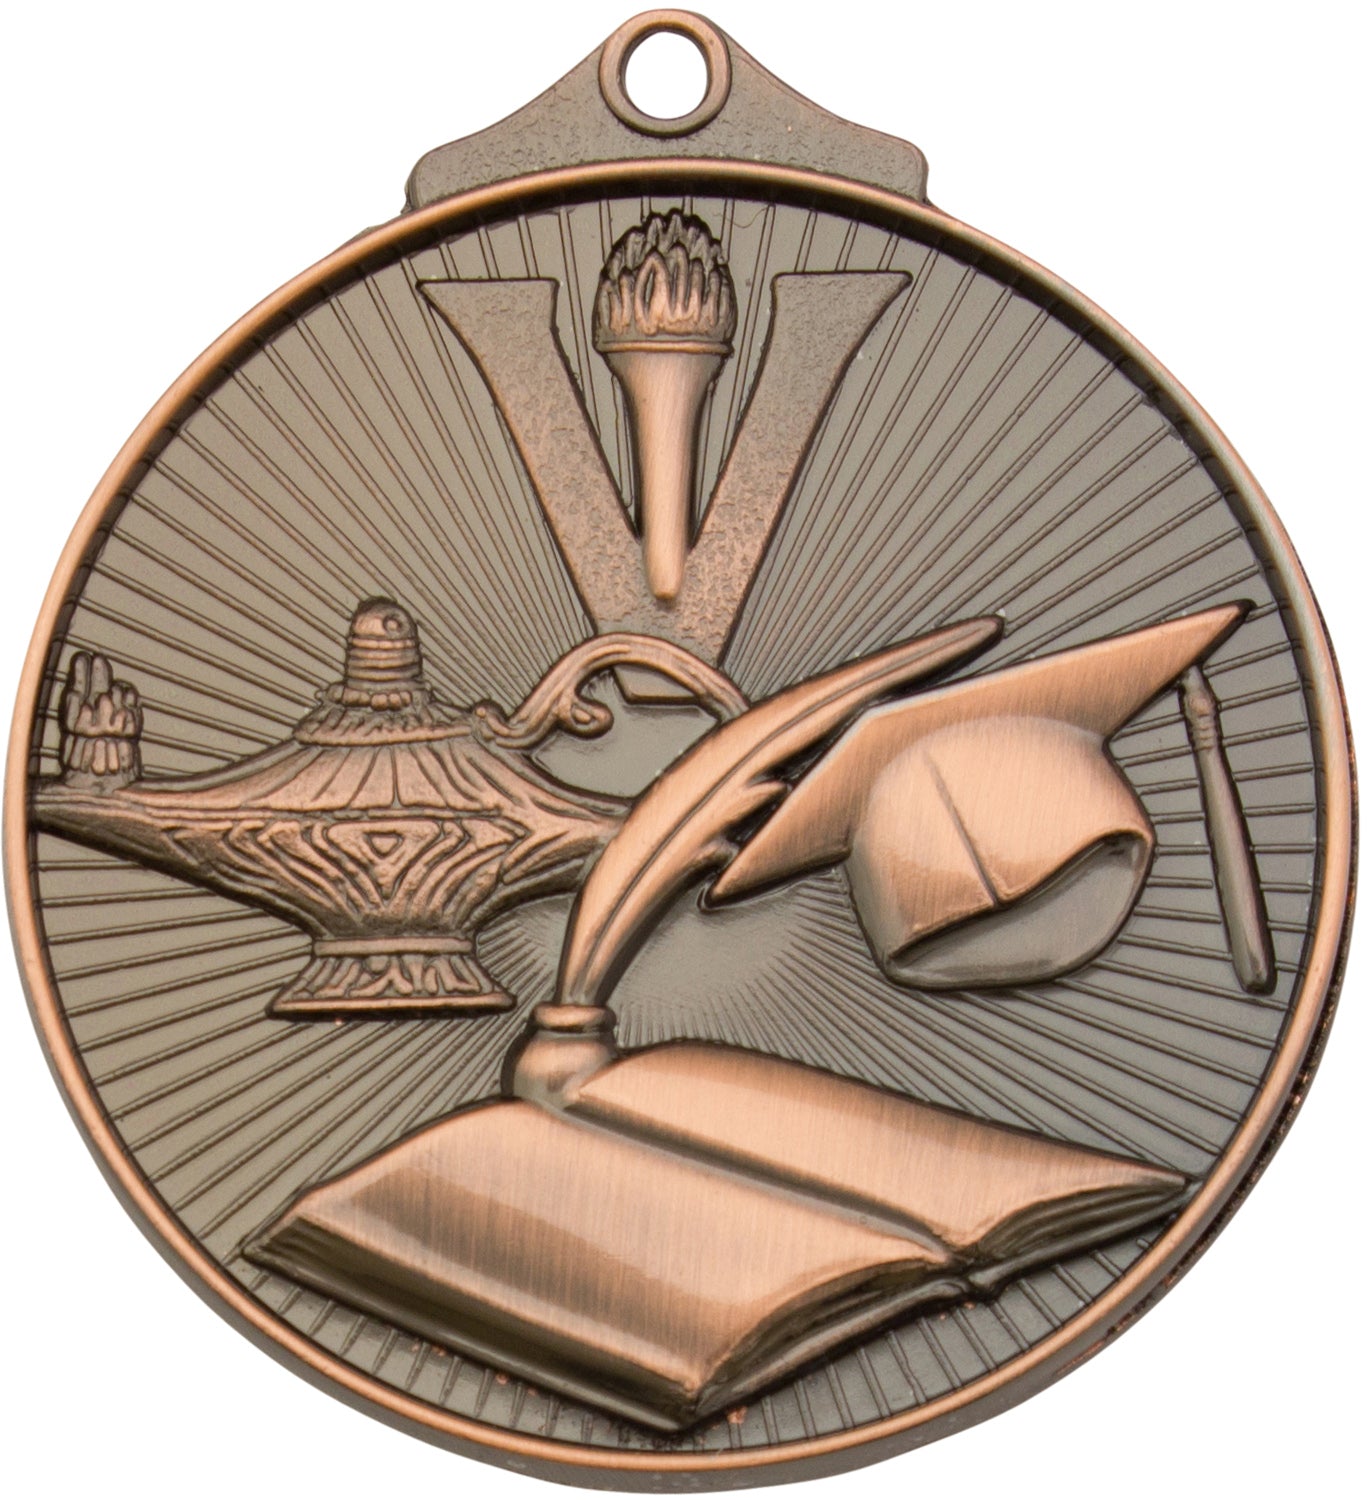 MD905 Academic Medal